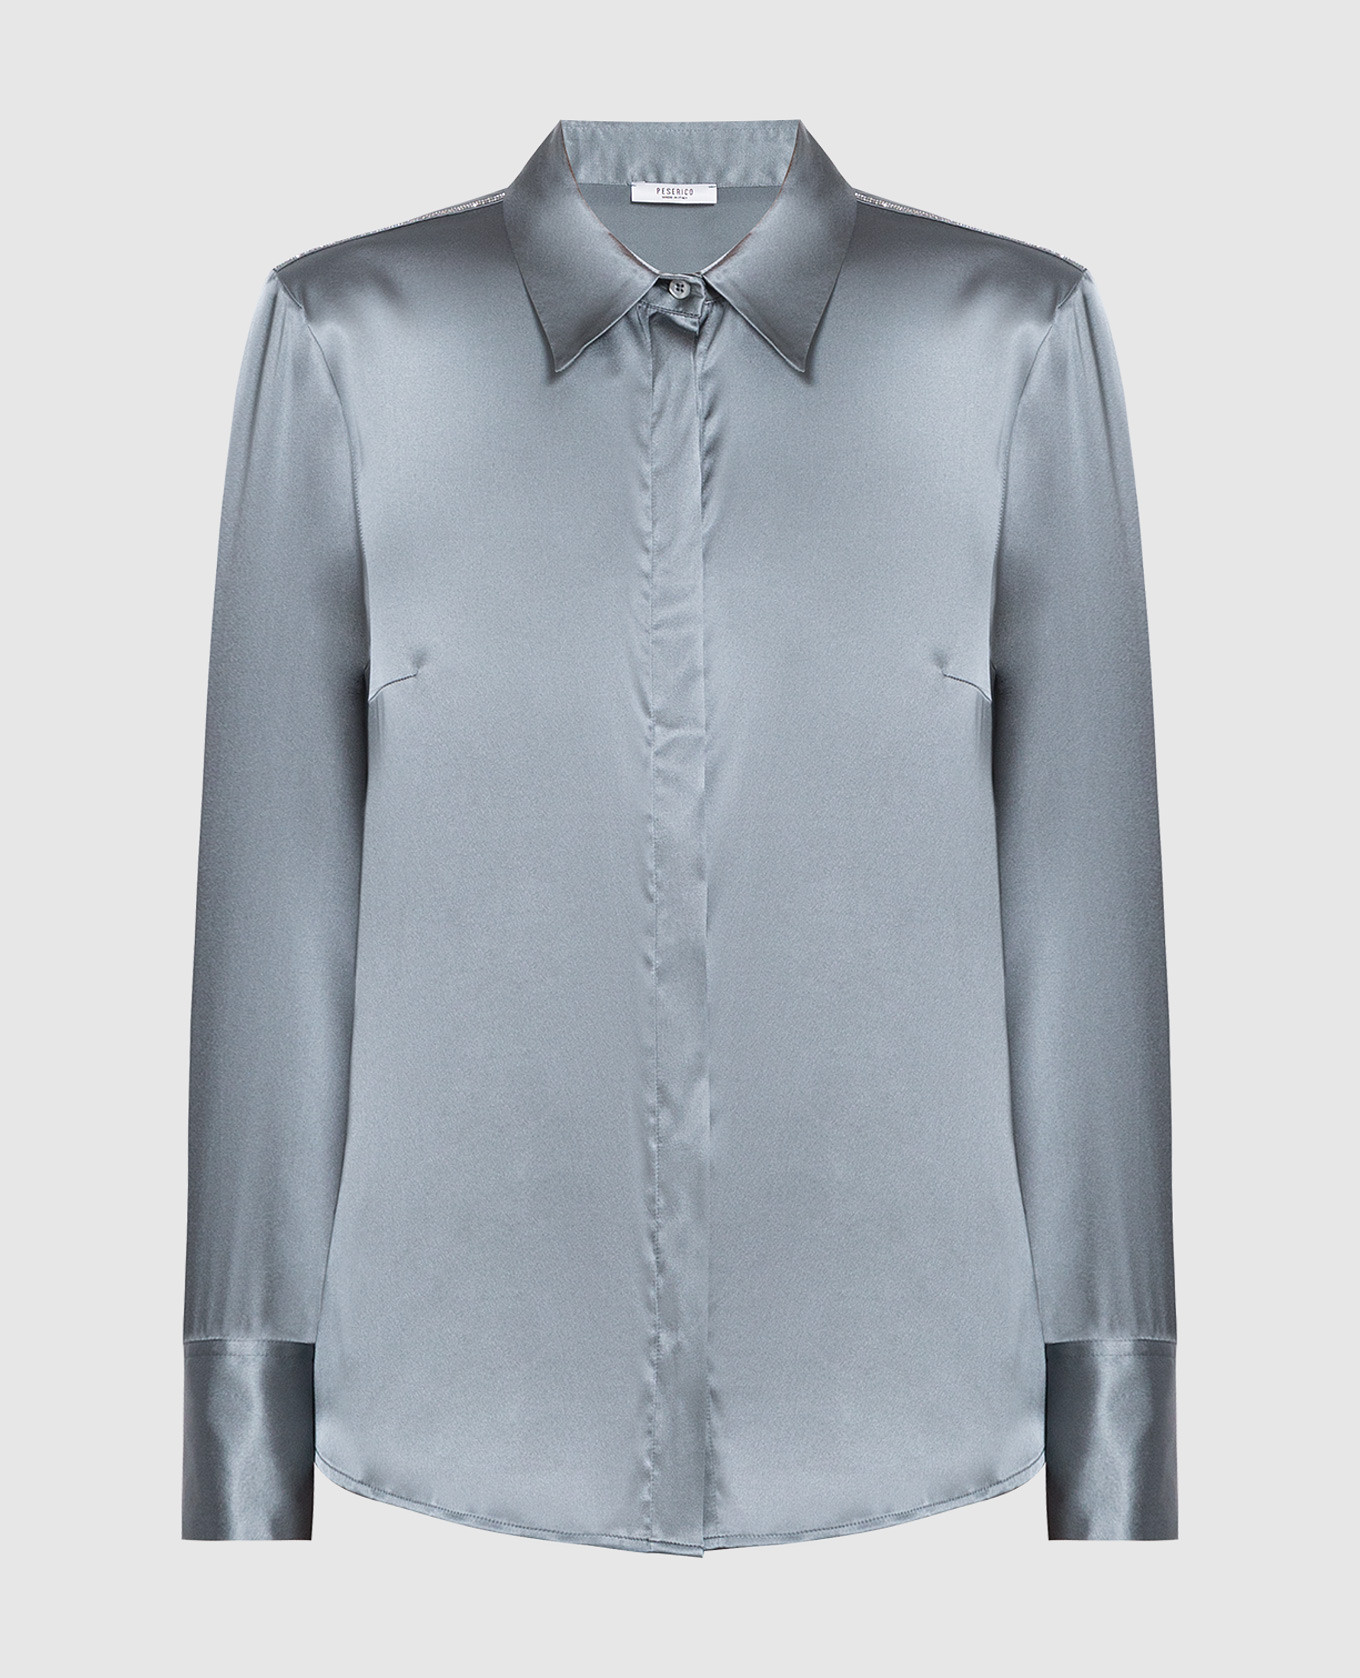 Gray silk shirt with monil chain